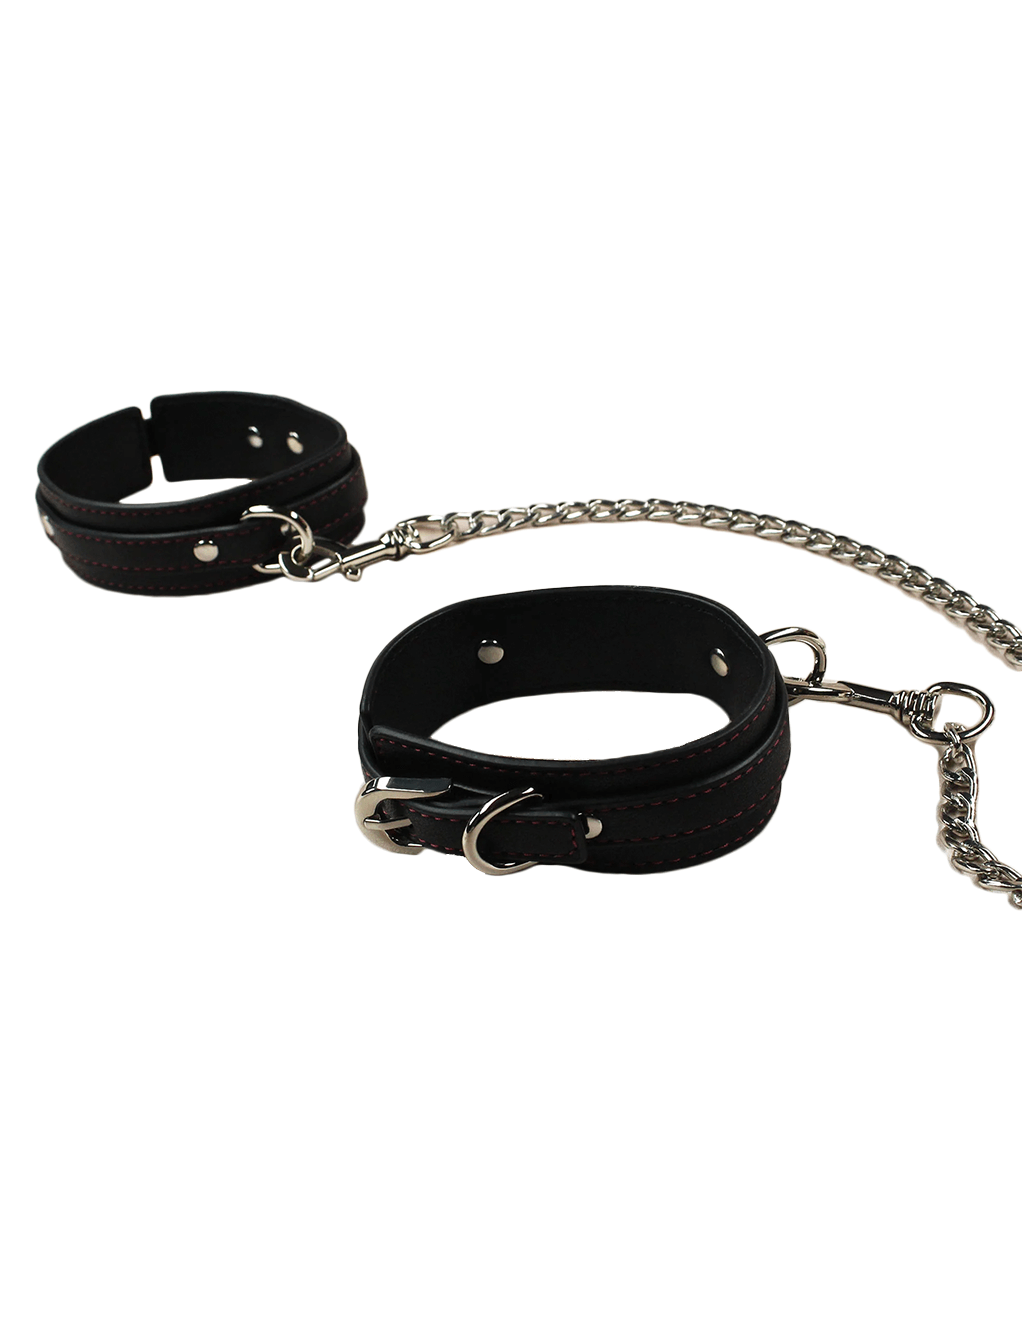 Edonista Isa Refined Restraint 9pc Bondage Set - Cuffs and Restraint Chain